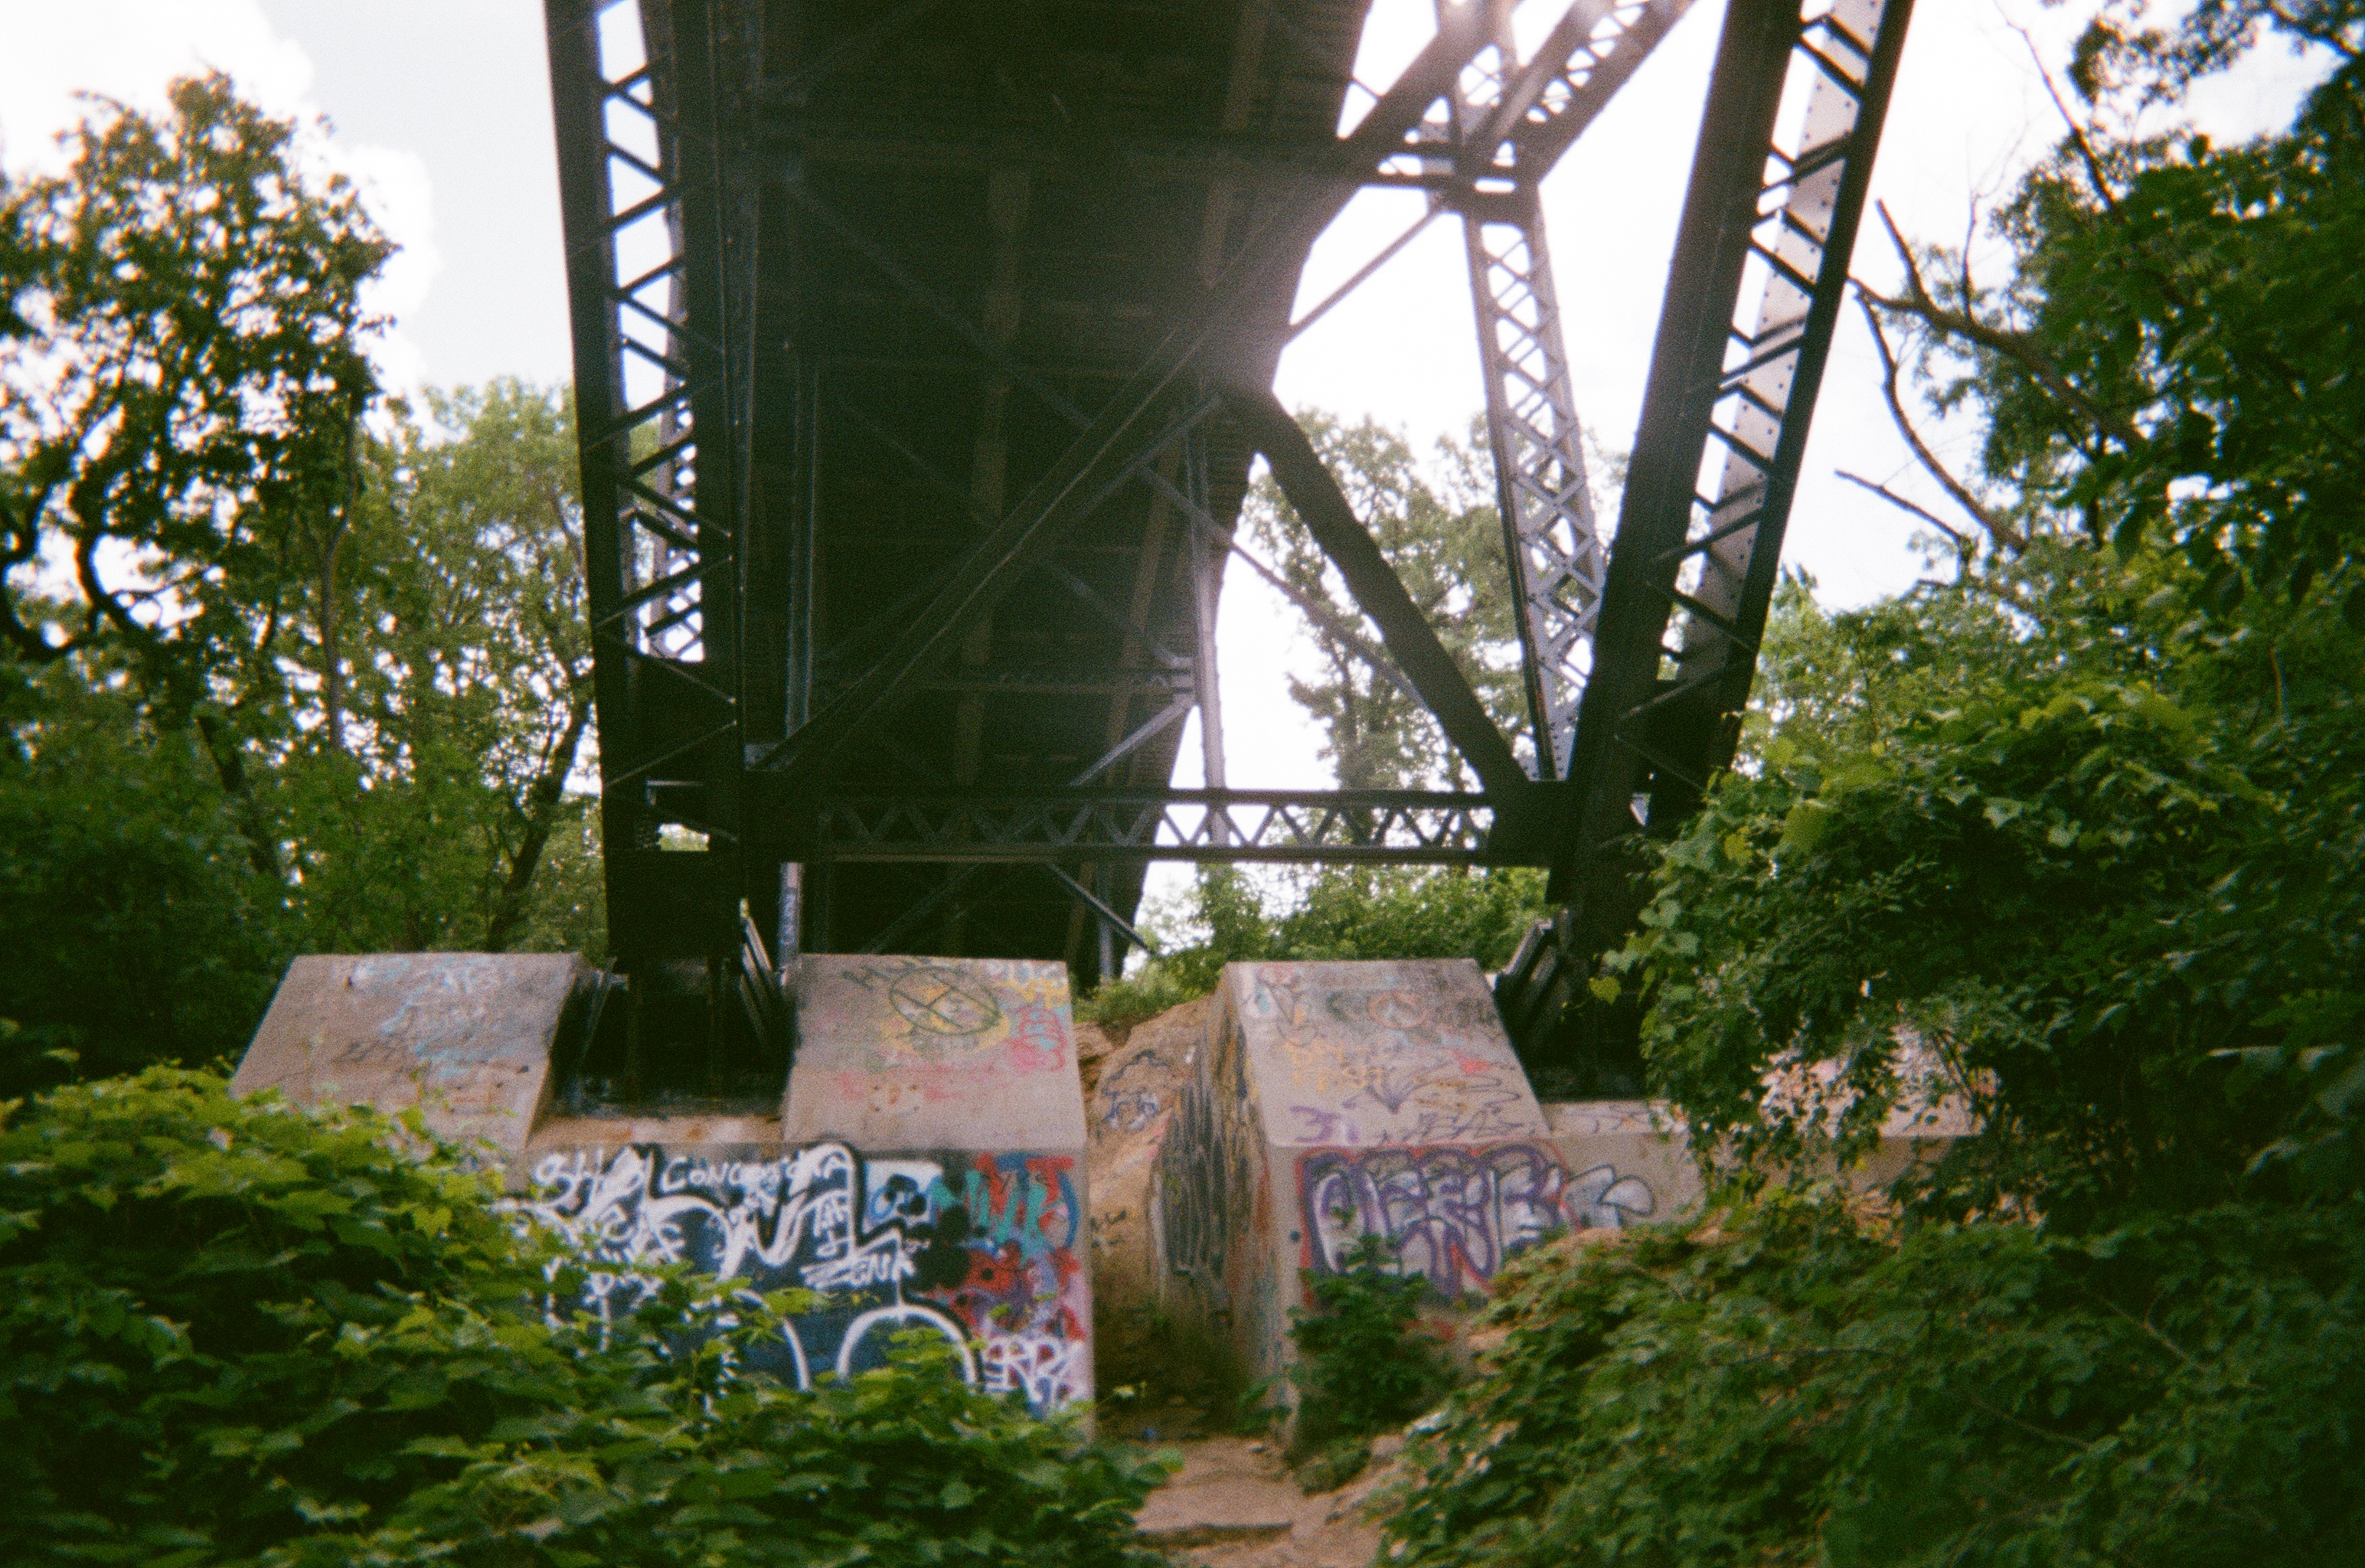 underside of bridge full of graffiti